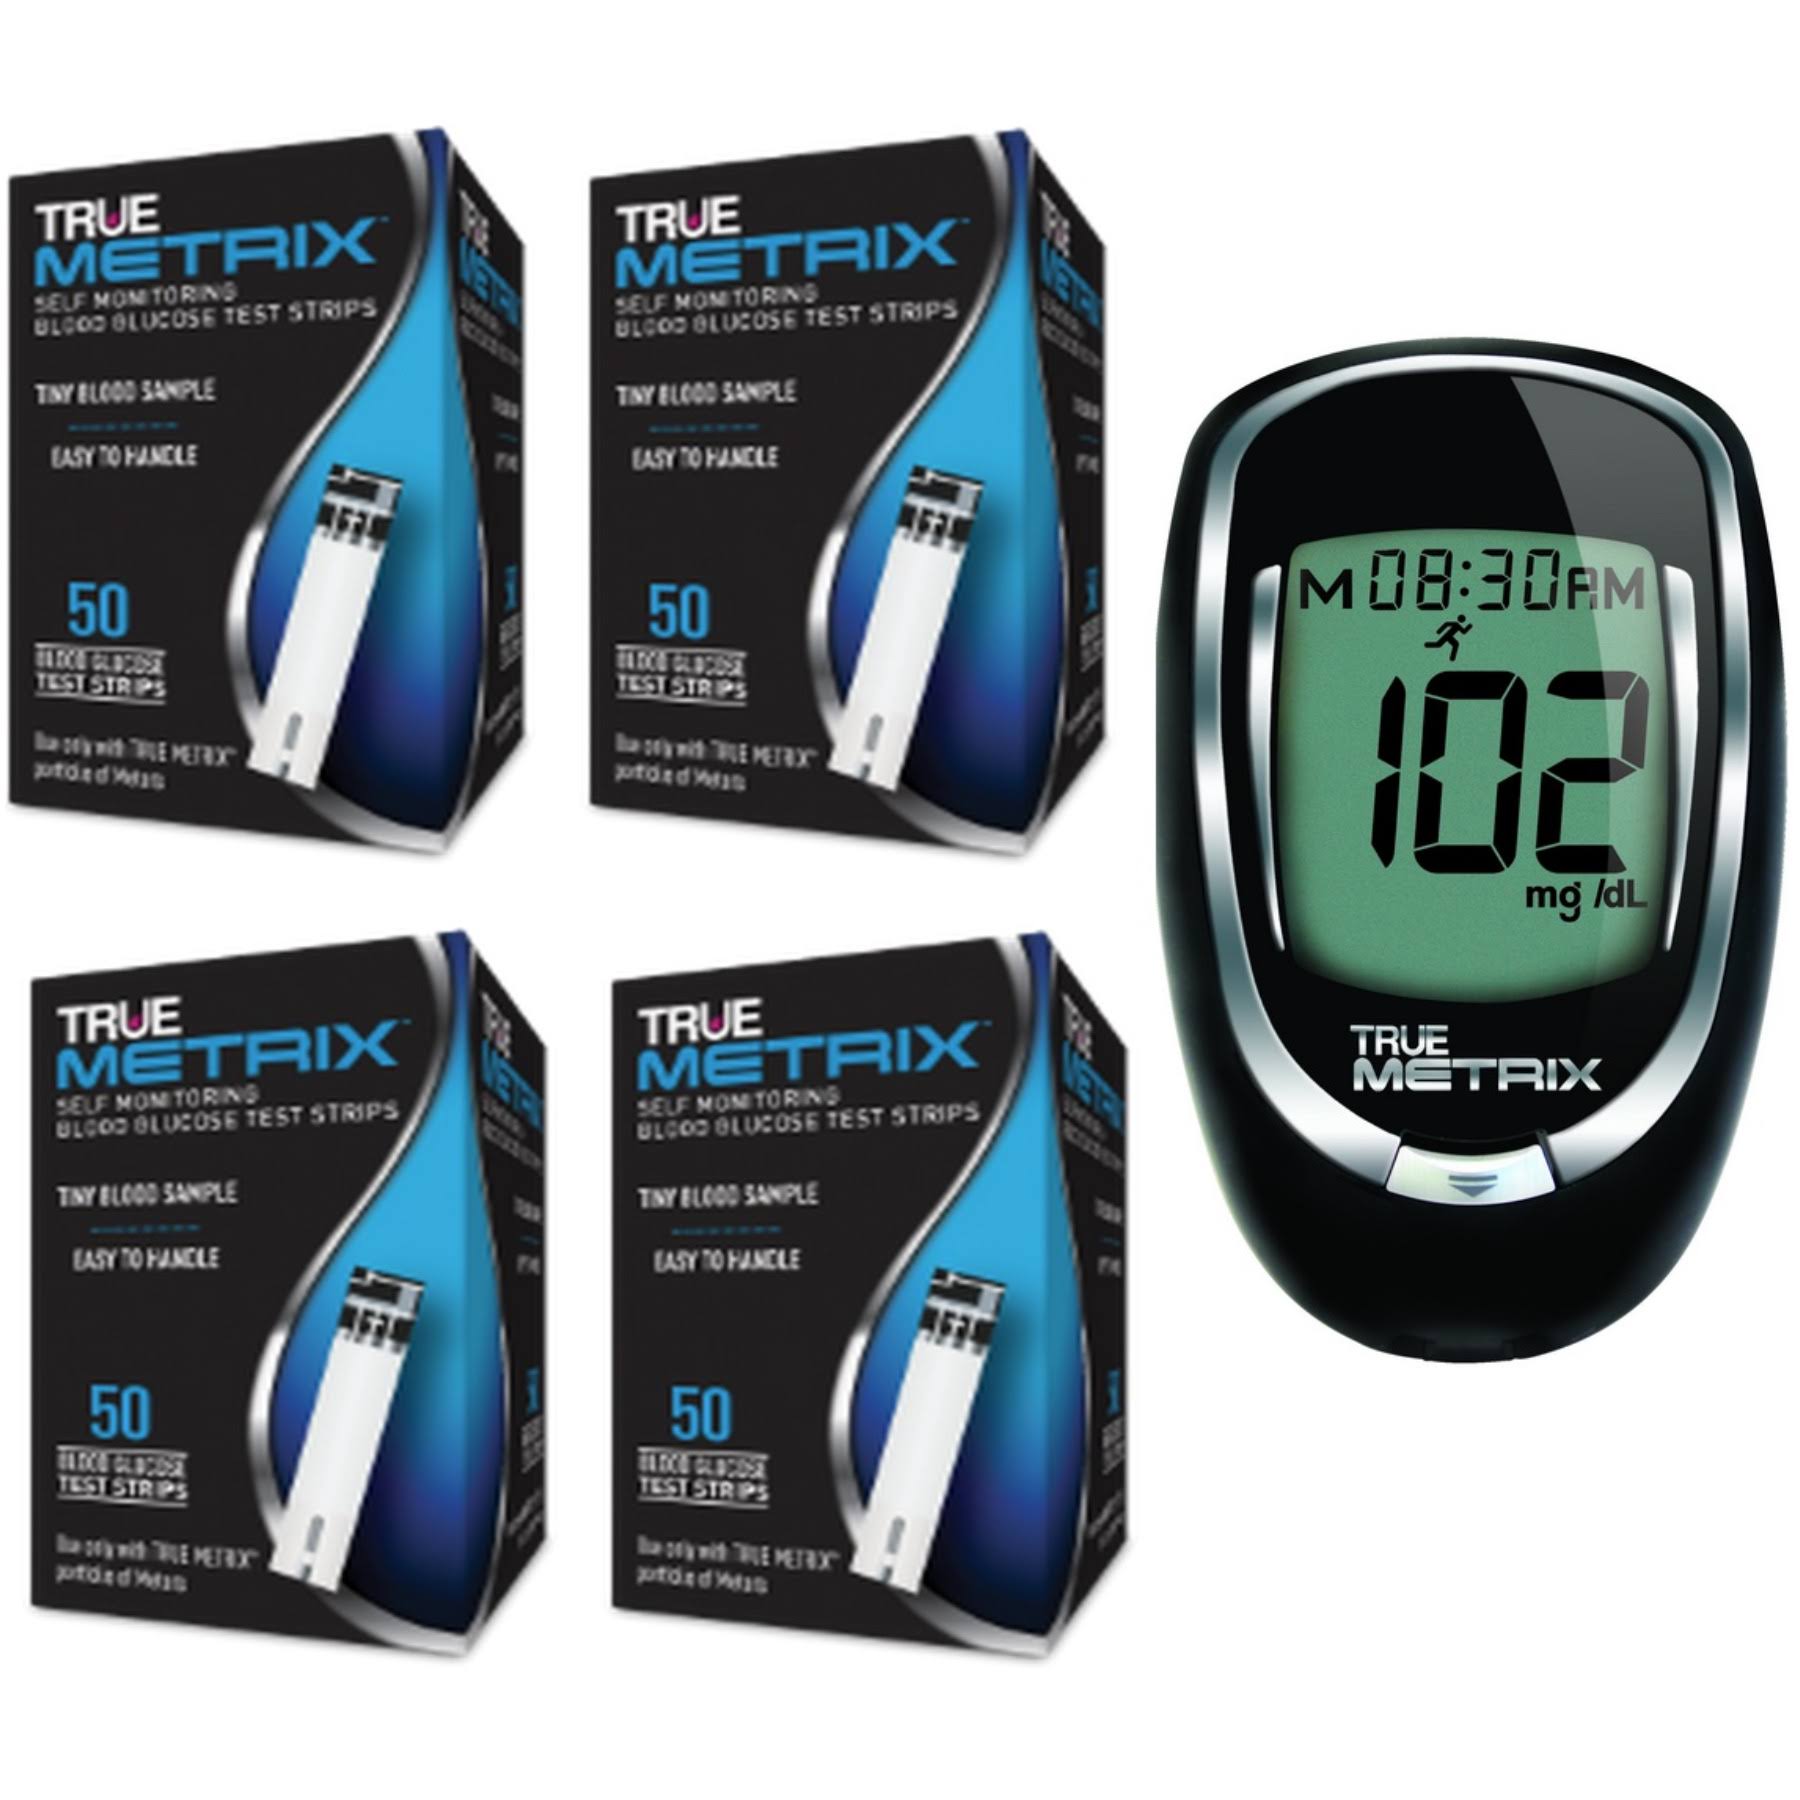 True Metrix Self Monitoring Glucose Meter